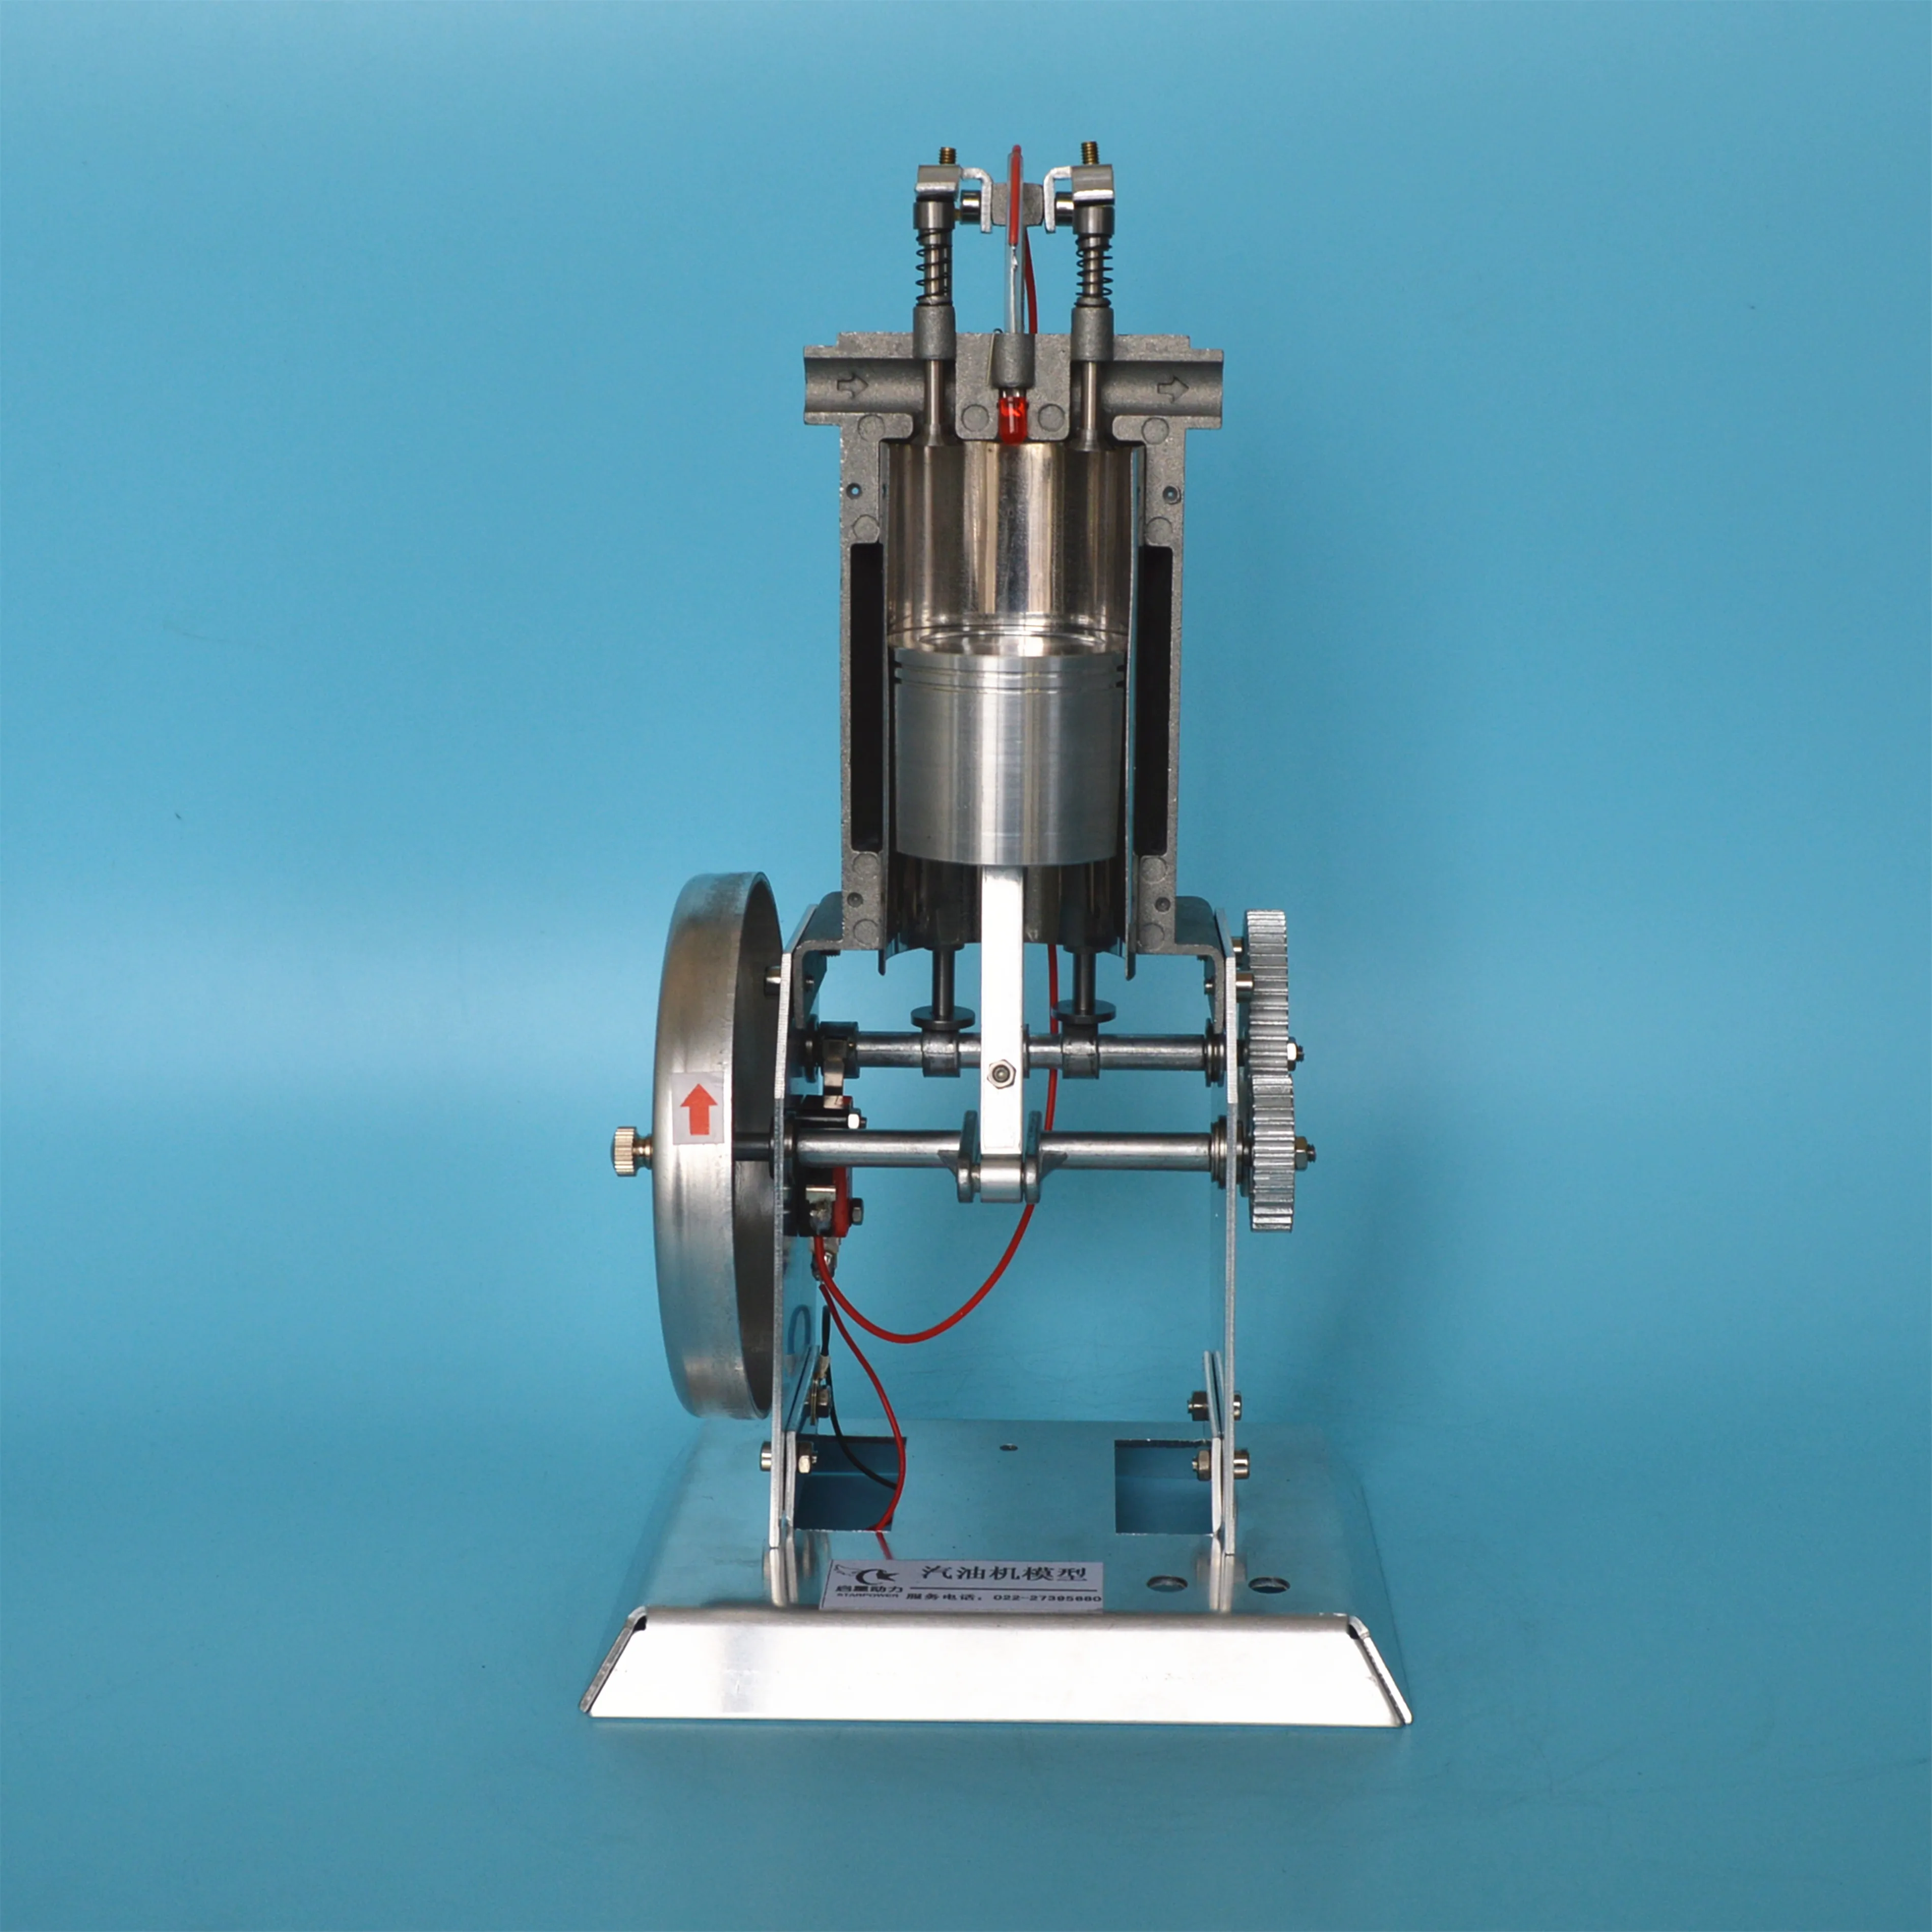 J31008 full metal gasoline engine model single cylinder internal combustion engine physics experiment teaching instrument